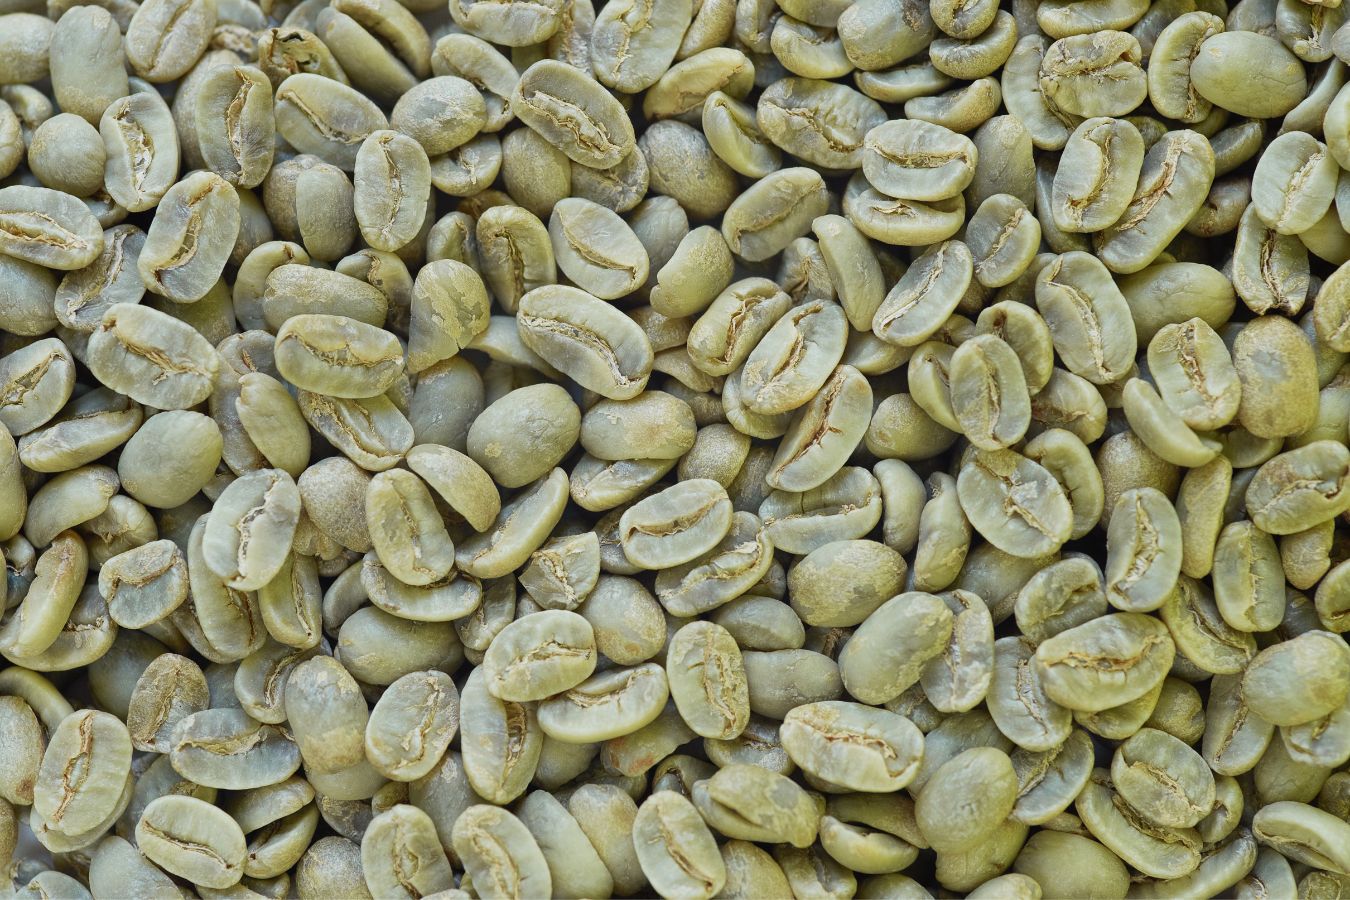 What Does Green Bean Mean?